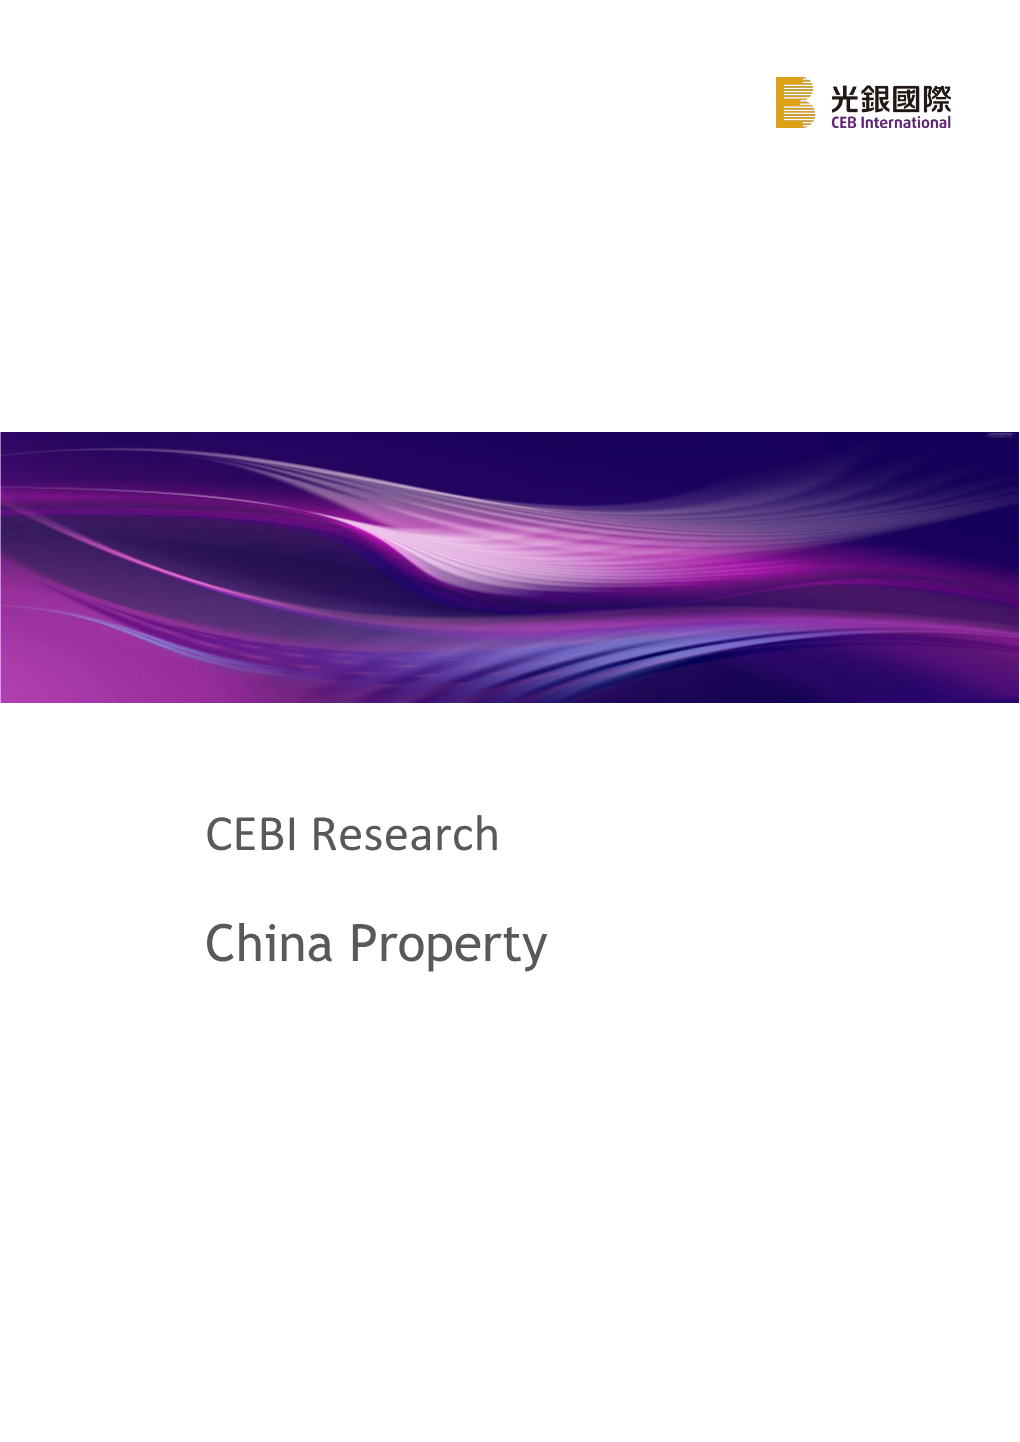 CEBI Research China Property